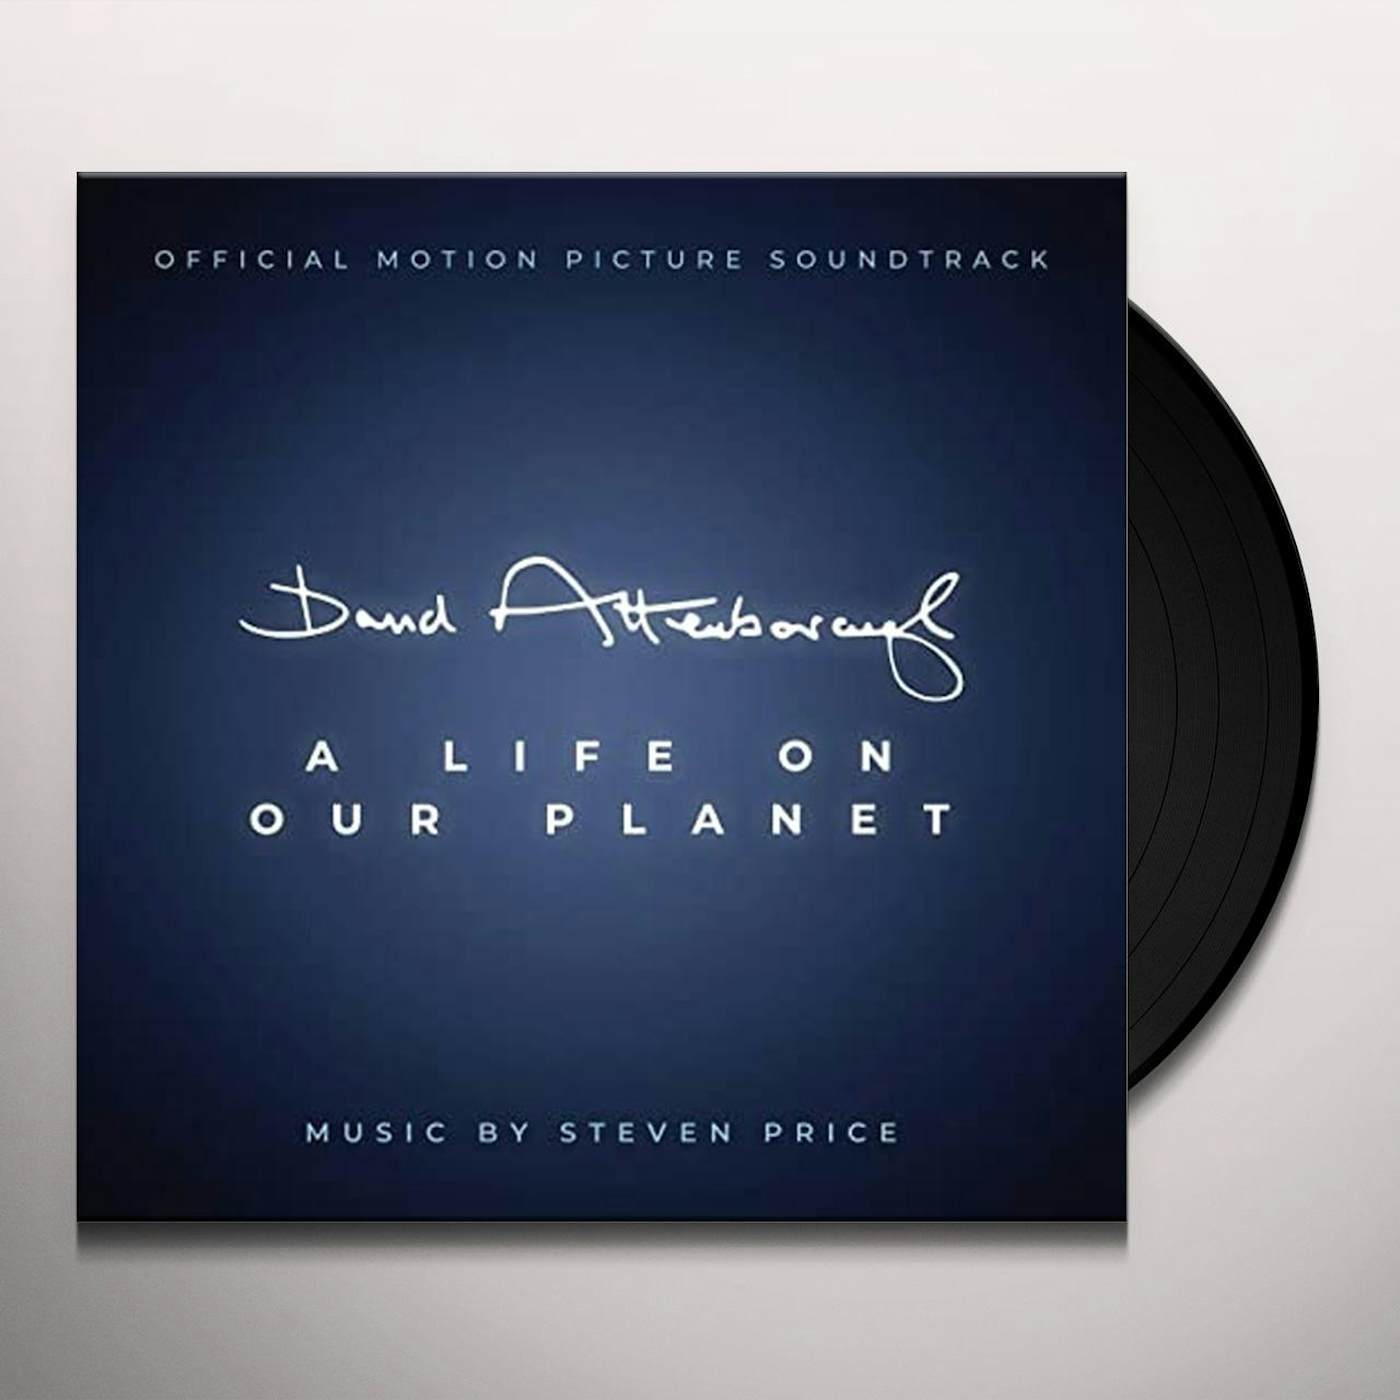 Steven Price OUR PLANET Vinyl Record